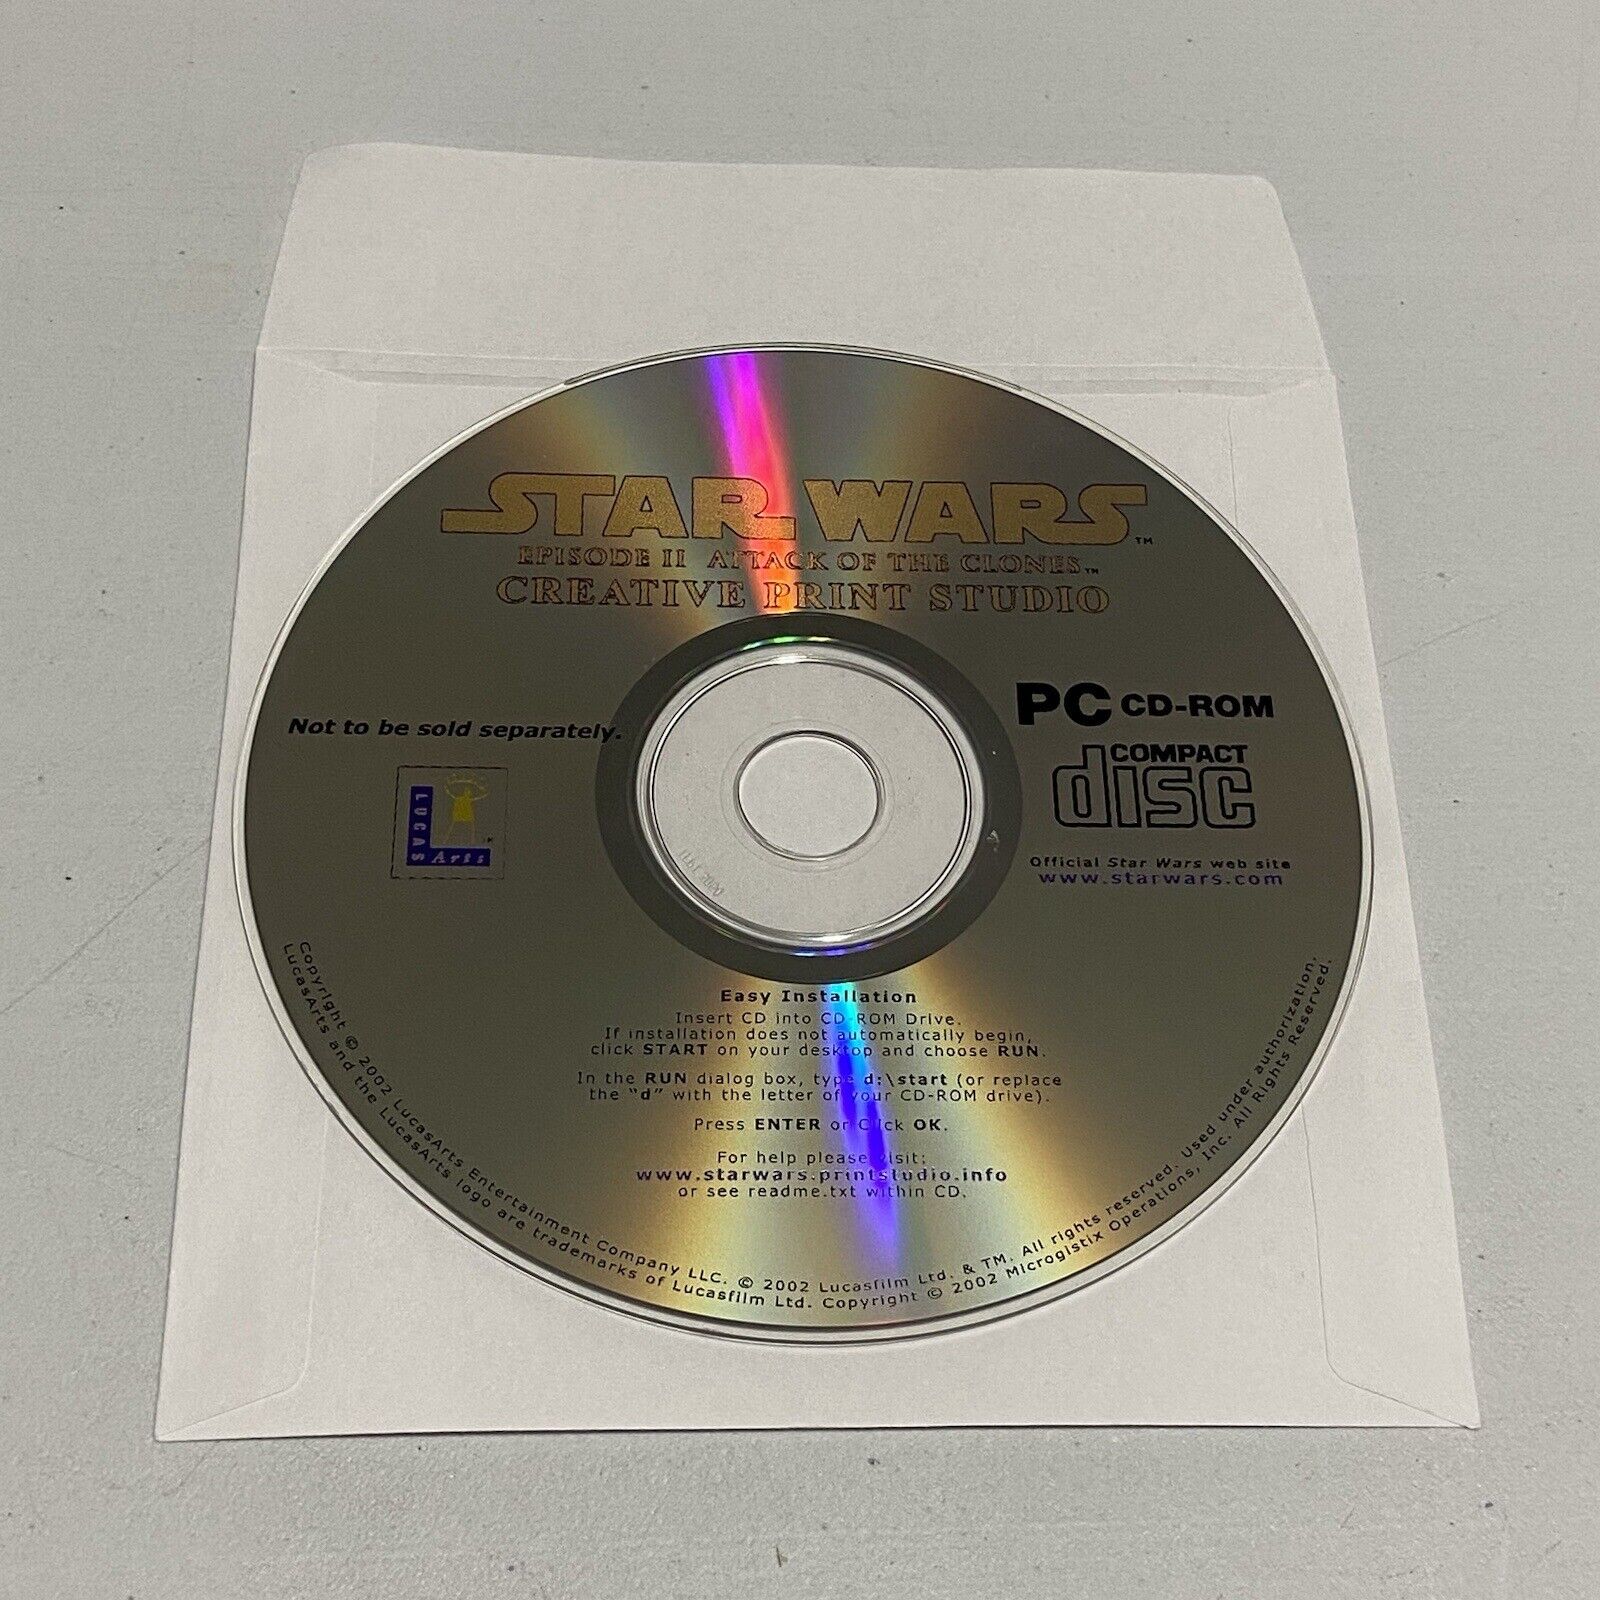 Star Wars Episode II: Attack of the Clones Creative Print Studio (PC, 2002) Mint